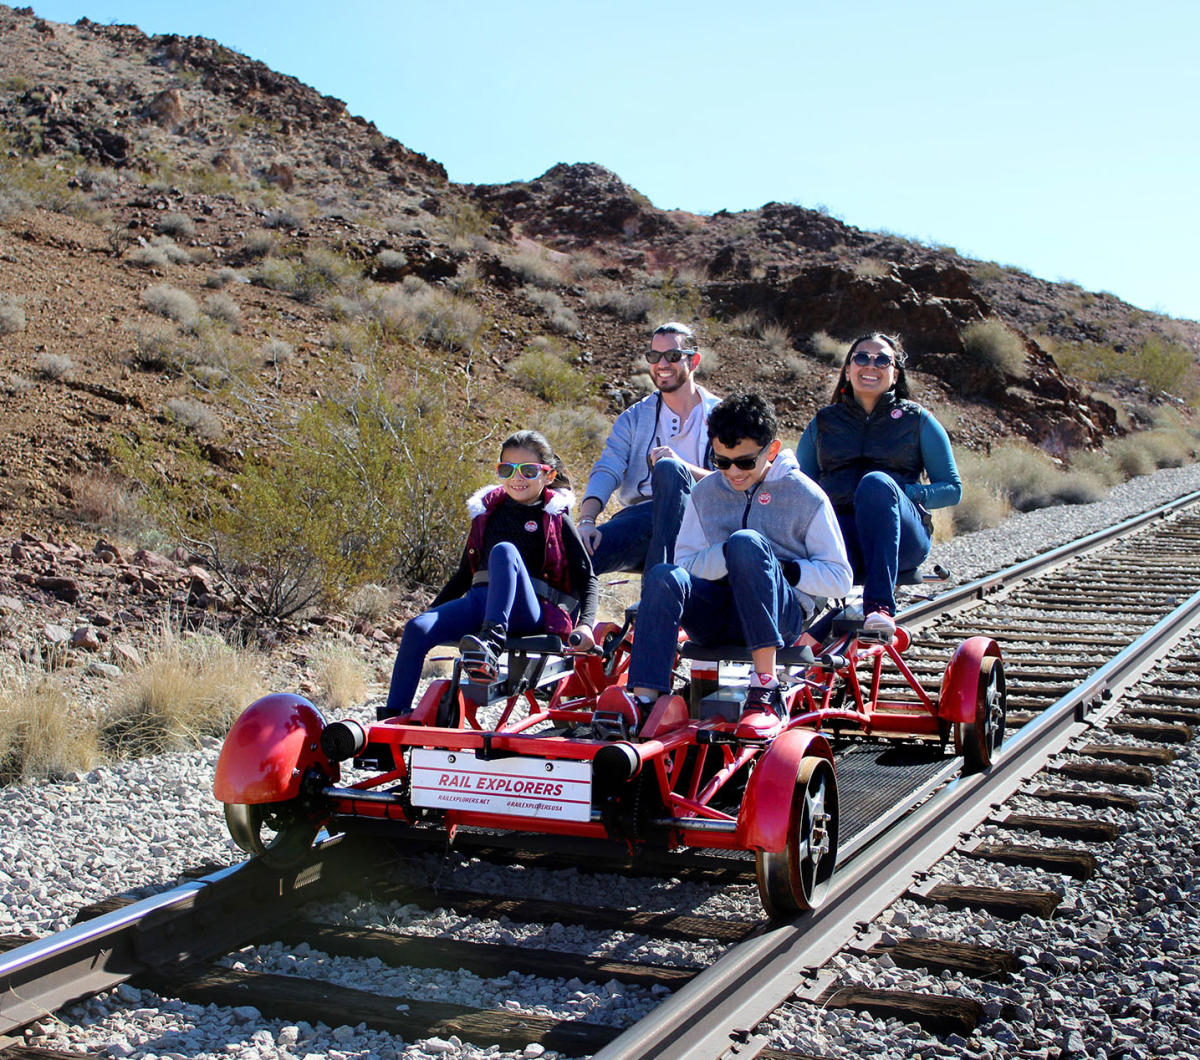 Rail Explorers Las Vegas Boulder City Nv 89005